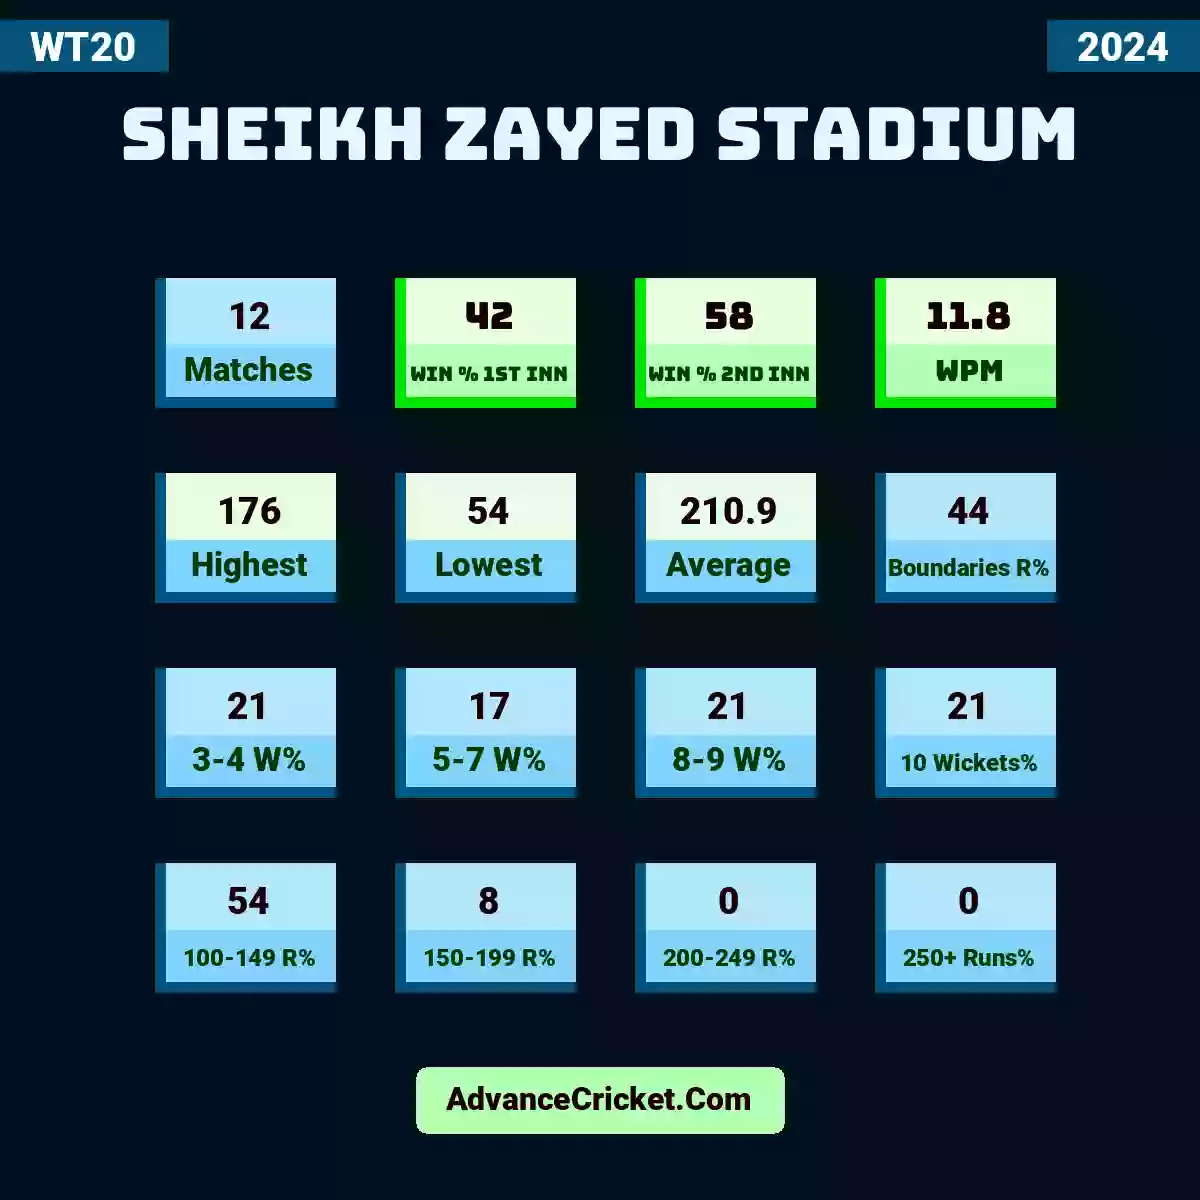 Image showing Sheikh Zayed Stadium WT20 2024 with Matches: 12, Win % 1st Inn: 42, Win % 2nd Inn: 58, WPM: 11.8, Highest: 176, Lowest: 54, Average: 210.9, Boundaries R%: 44, 3-4 W%: 21, 5-7 W%: 17, 8-9 W%: 21, 10 Wickets%: 21, 100-149 R%: 54, 150-199 R%: 8, 200-249 R%: 0, 250+ Runs%: 0.